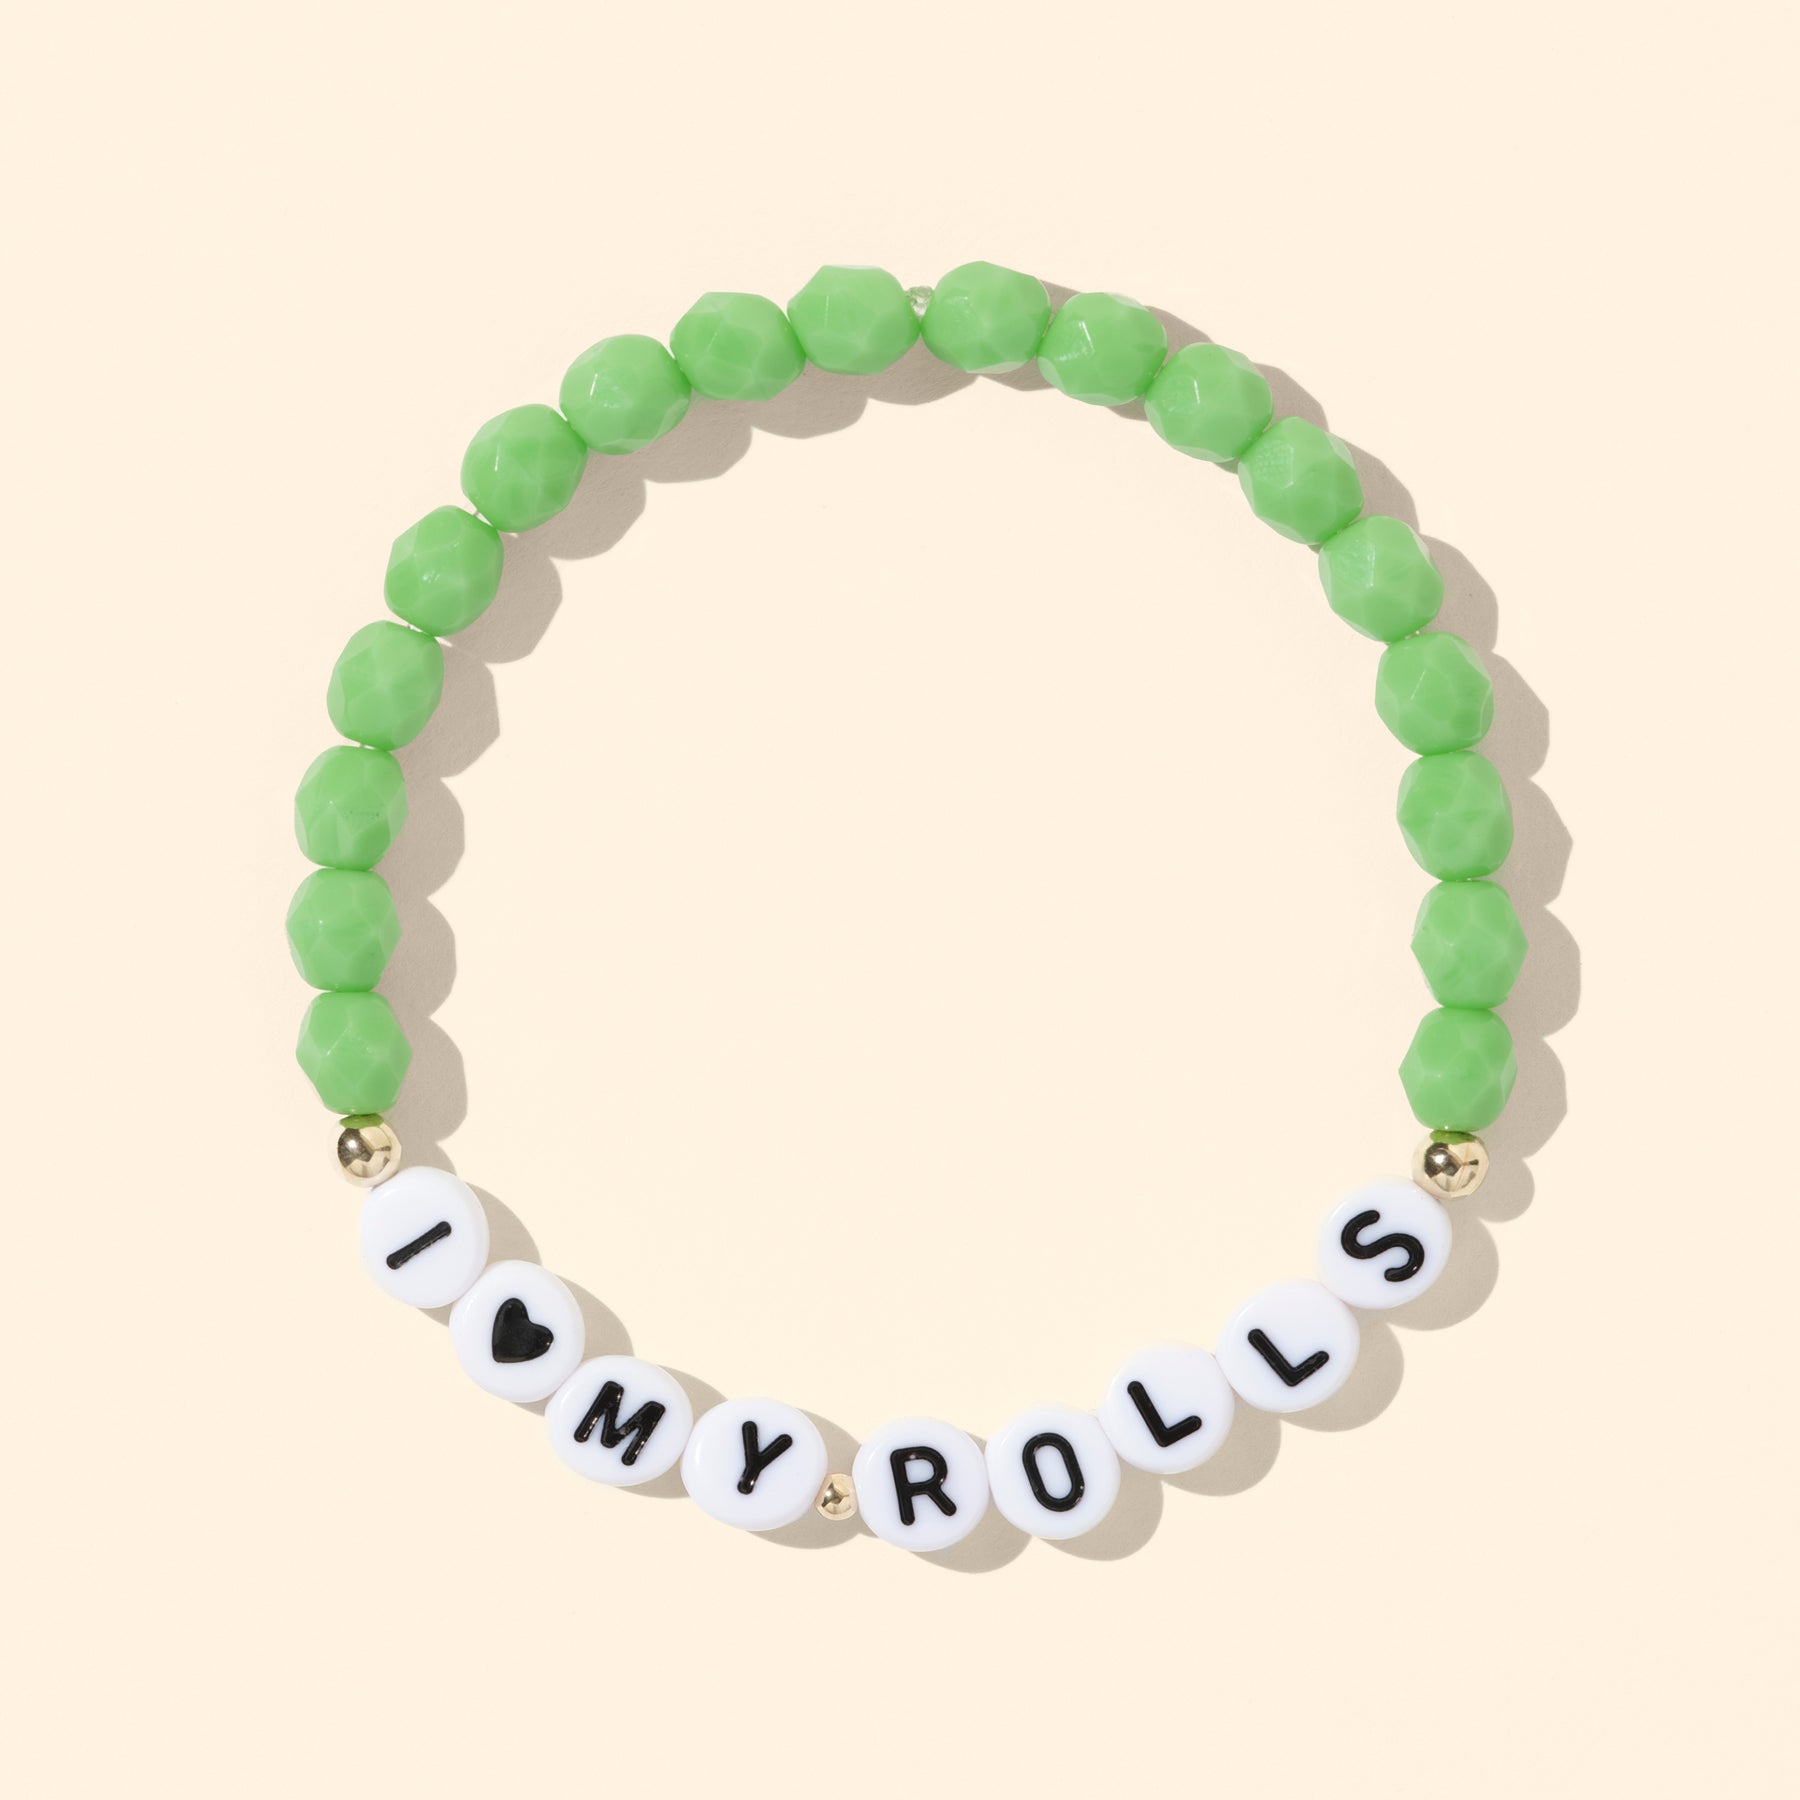 The I ♥ MY ROLLS Bracelet